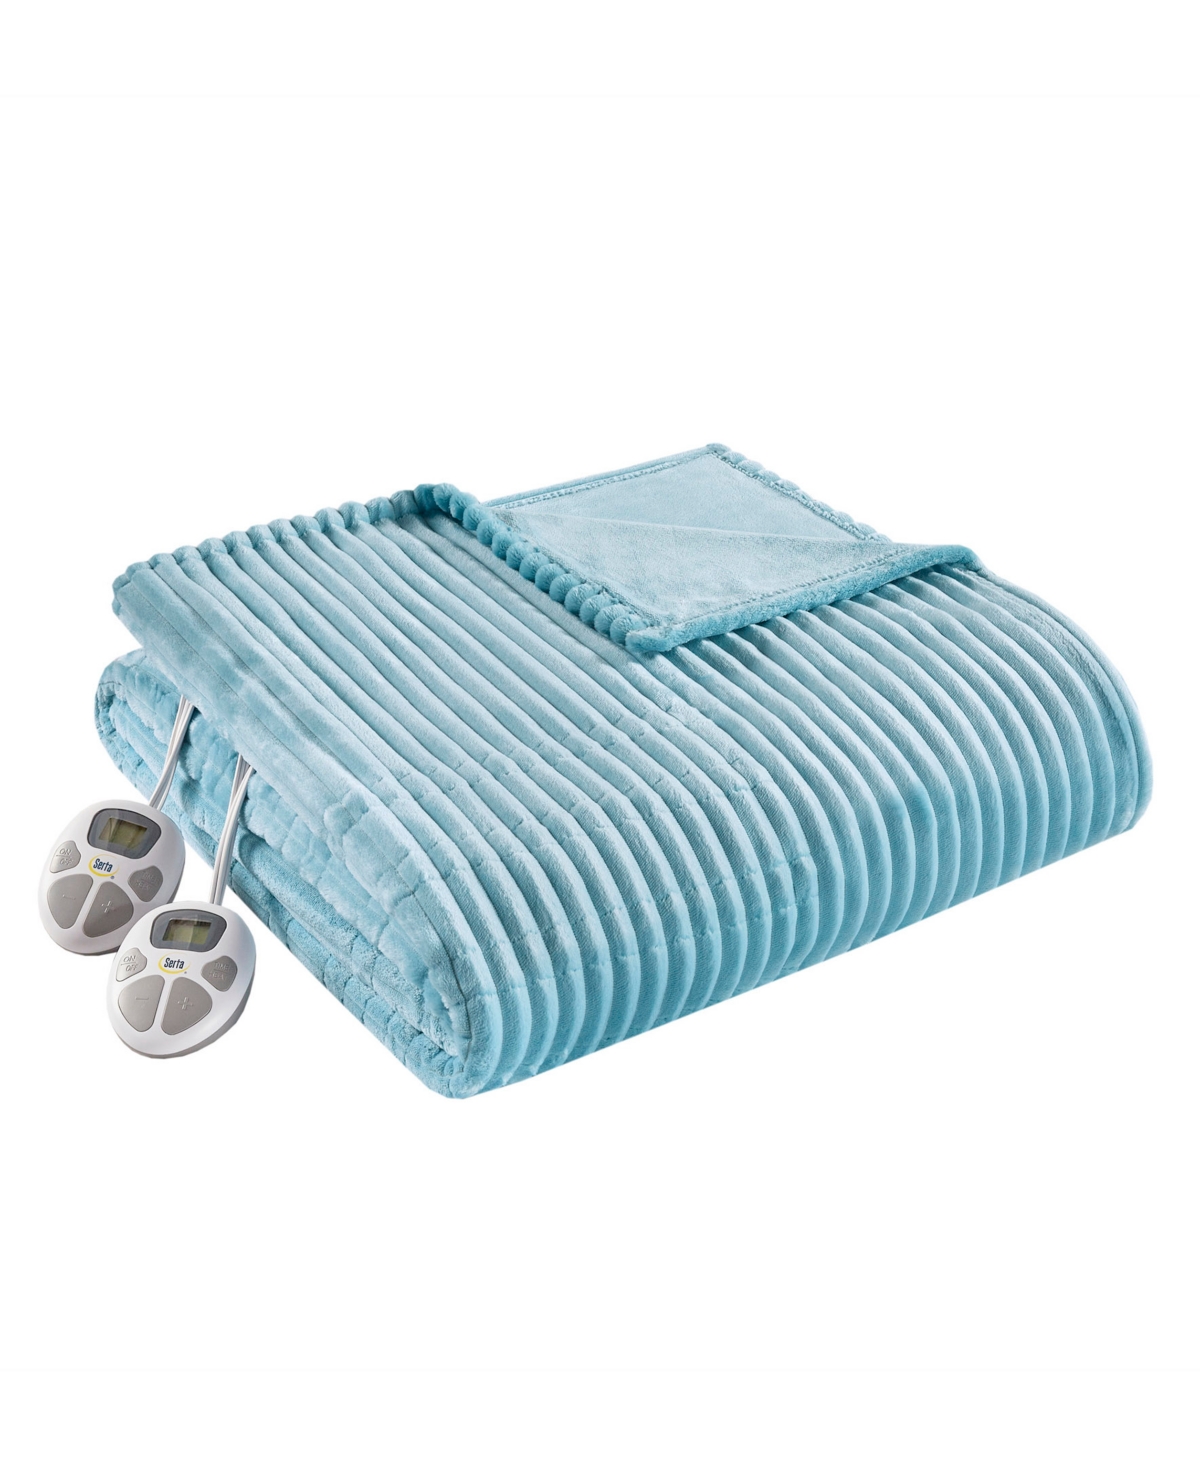 Serta Corded Plush Heated Blanket, Full In Blue